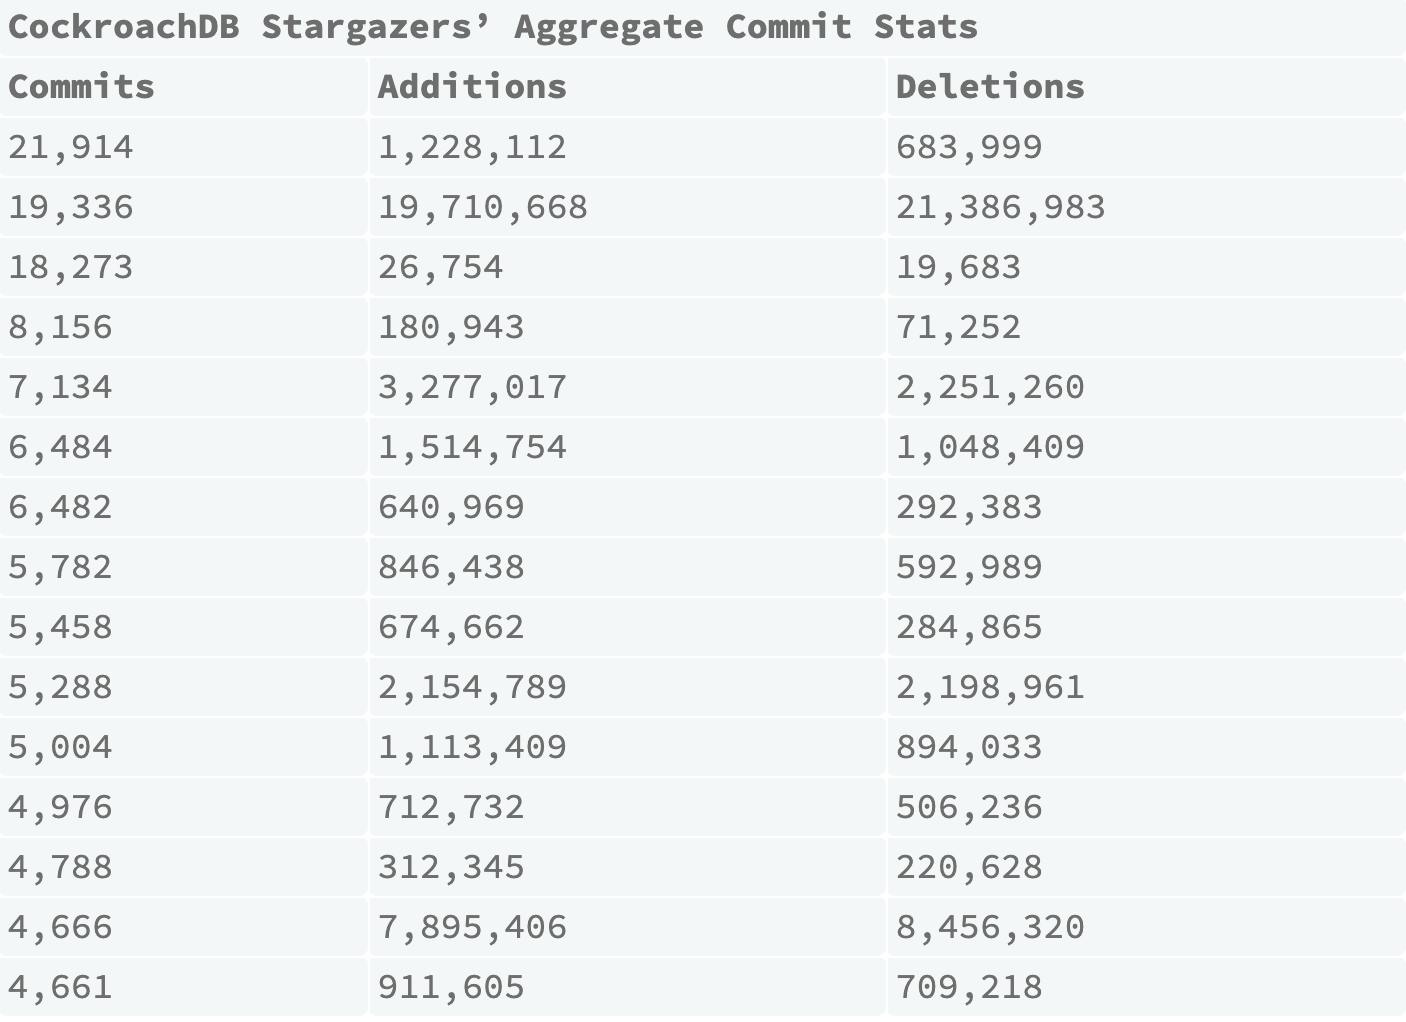 CockroachDB Stargazers’ Aggregate Commit Stats